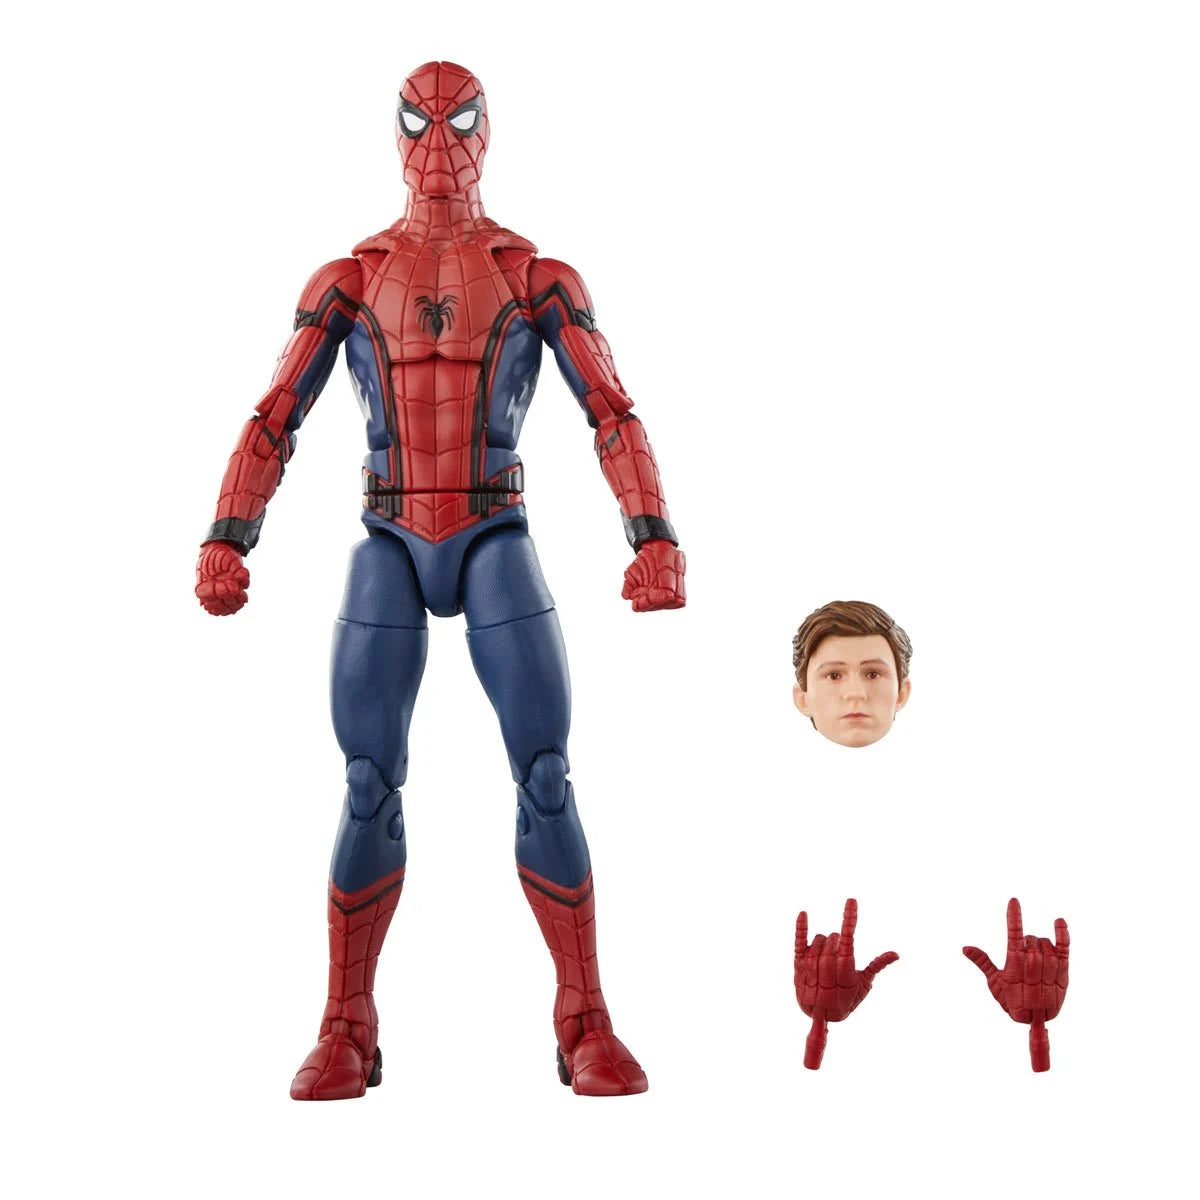 Captain America: Civil War Marvel Legends Spider-Man 6-Inch Action Figure